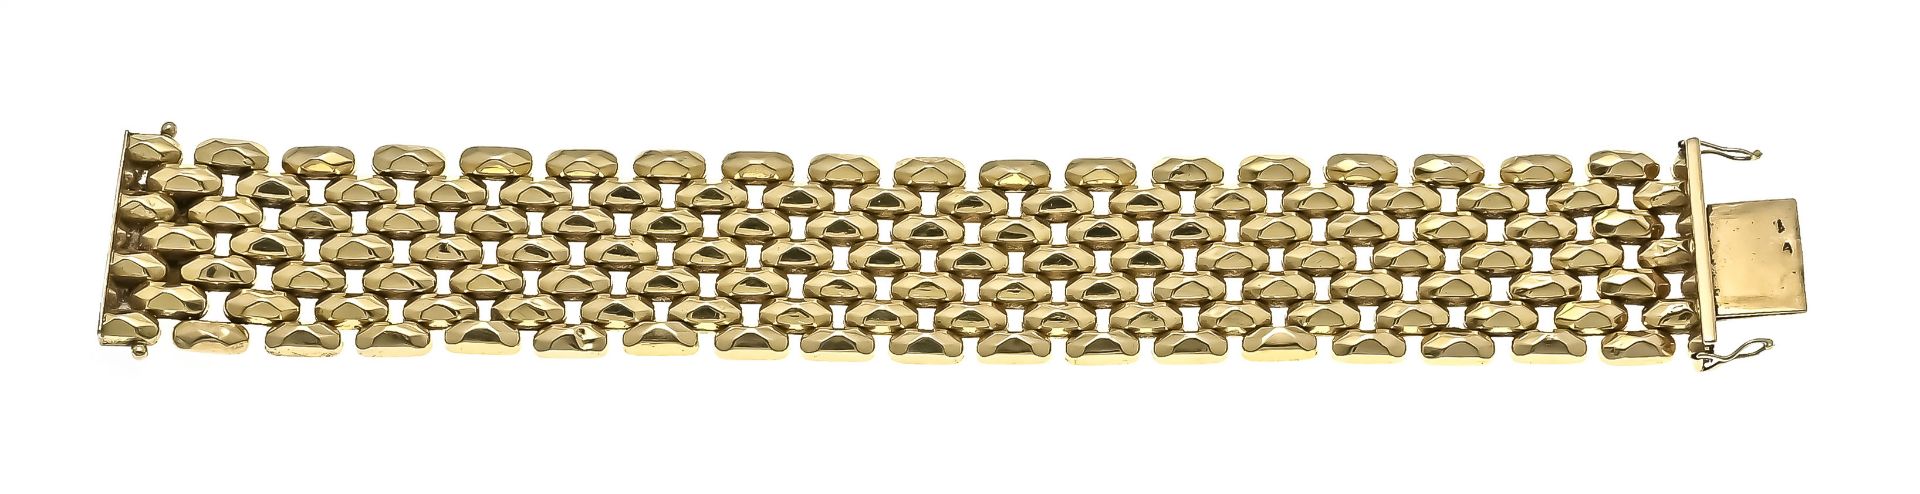 Bracelet, 18 ct. yellow gold, length 19 cm, width 3 cm, weight 58 g